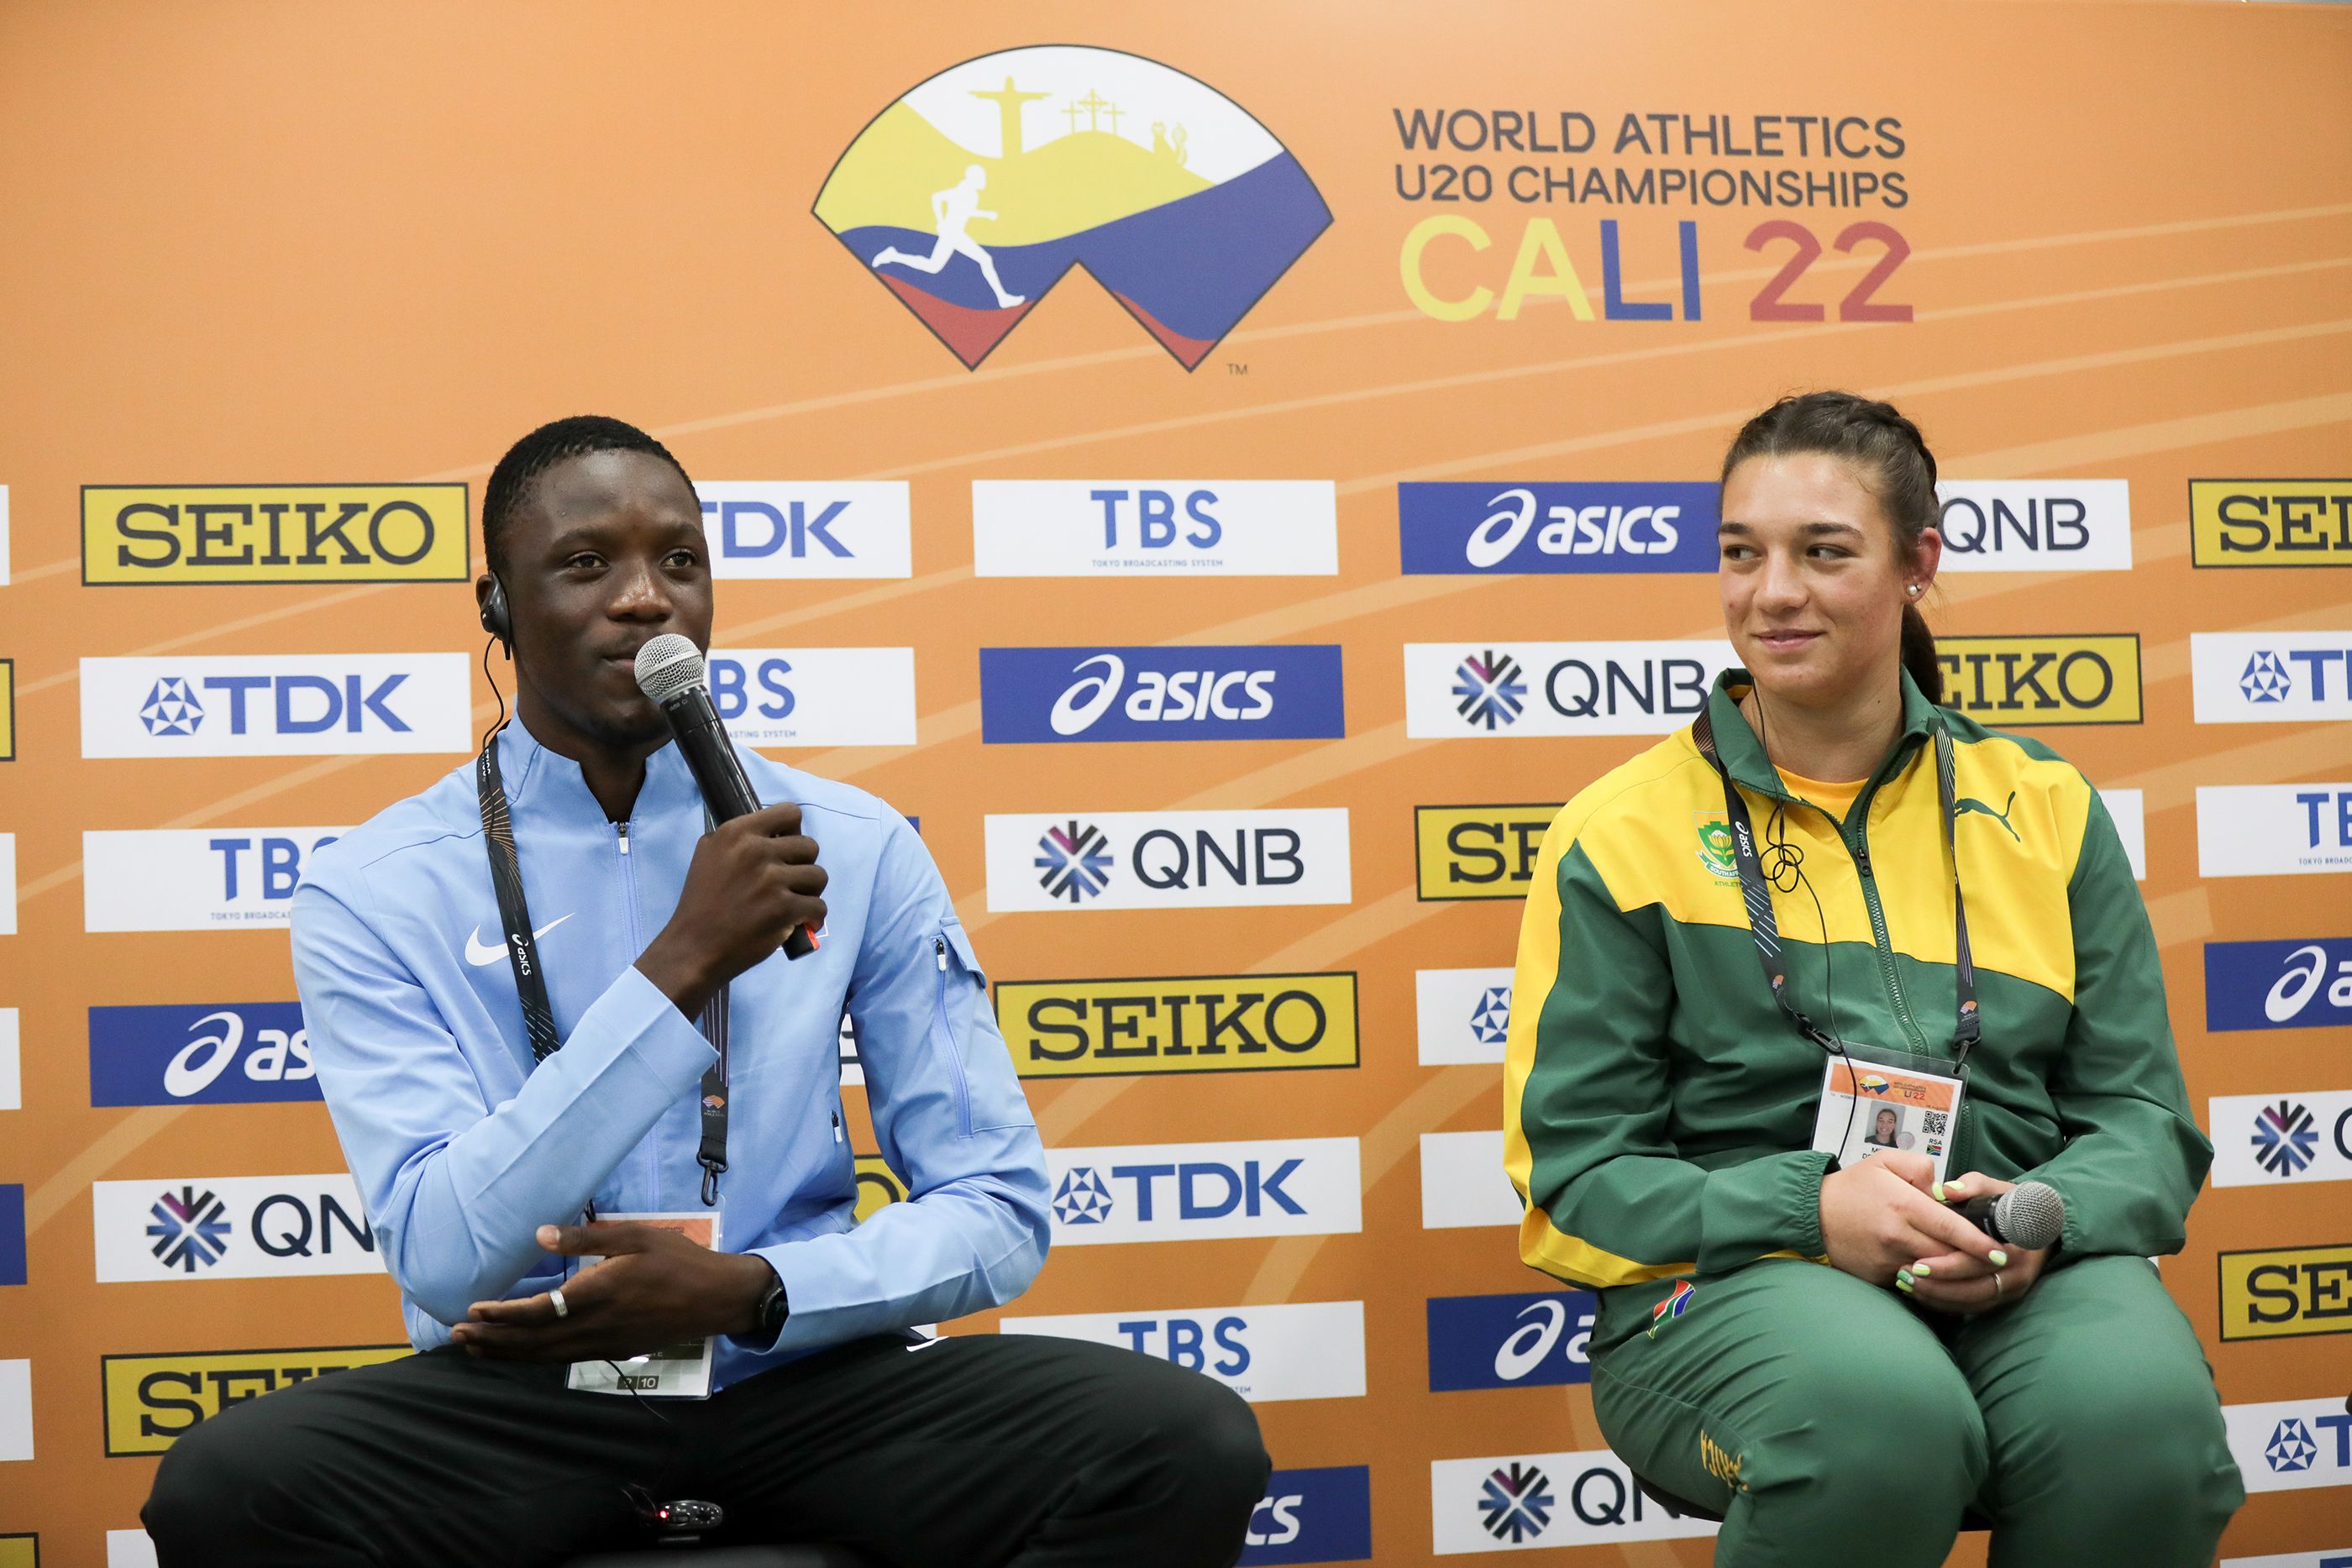 Letsile Tebogo and Mine de Klerk speak with the media ahead of the World Athletics U20 Championships Cali 22